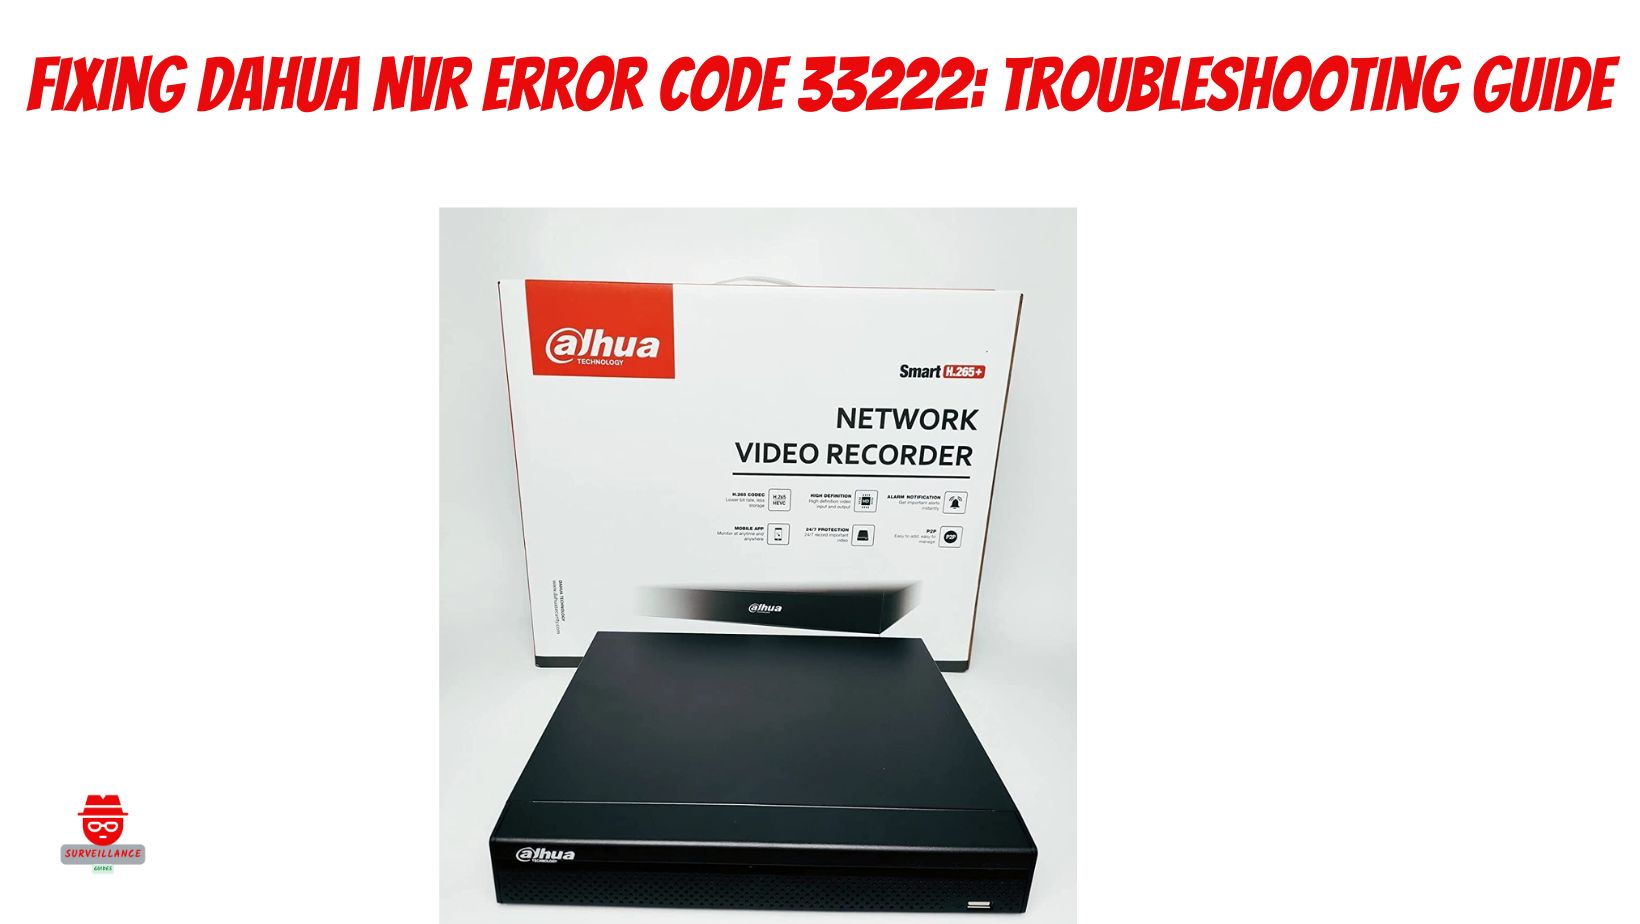 Dahua NVR error code 33222